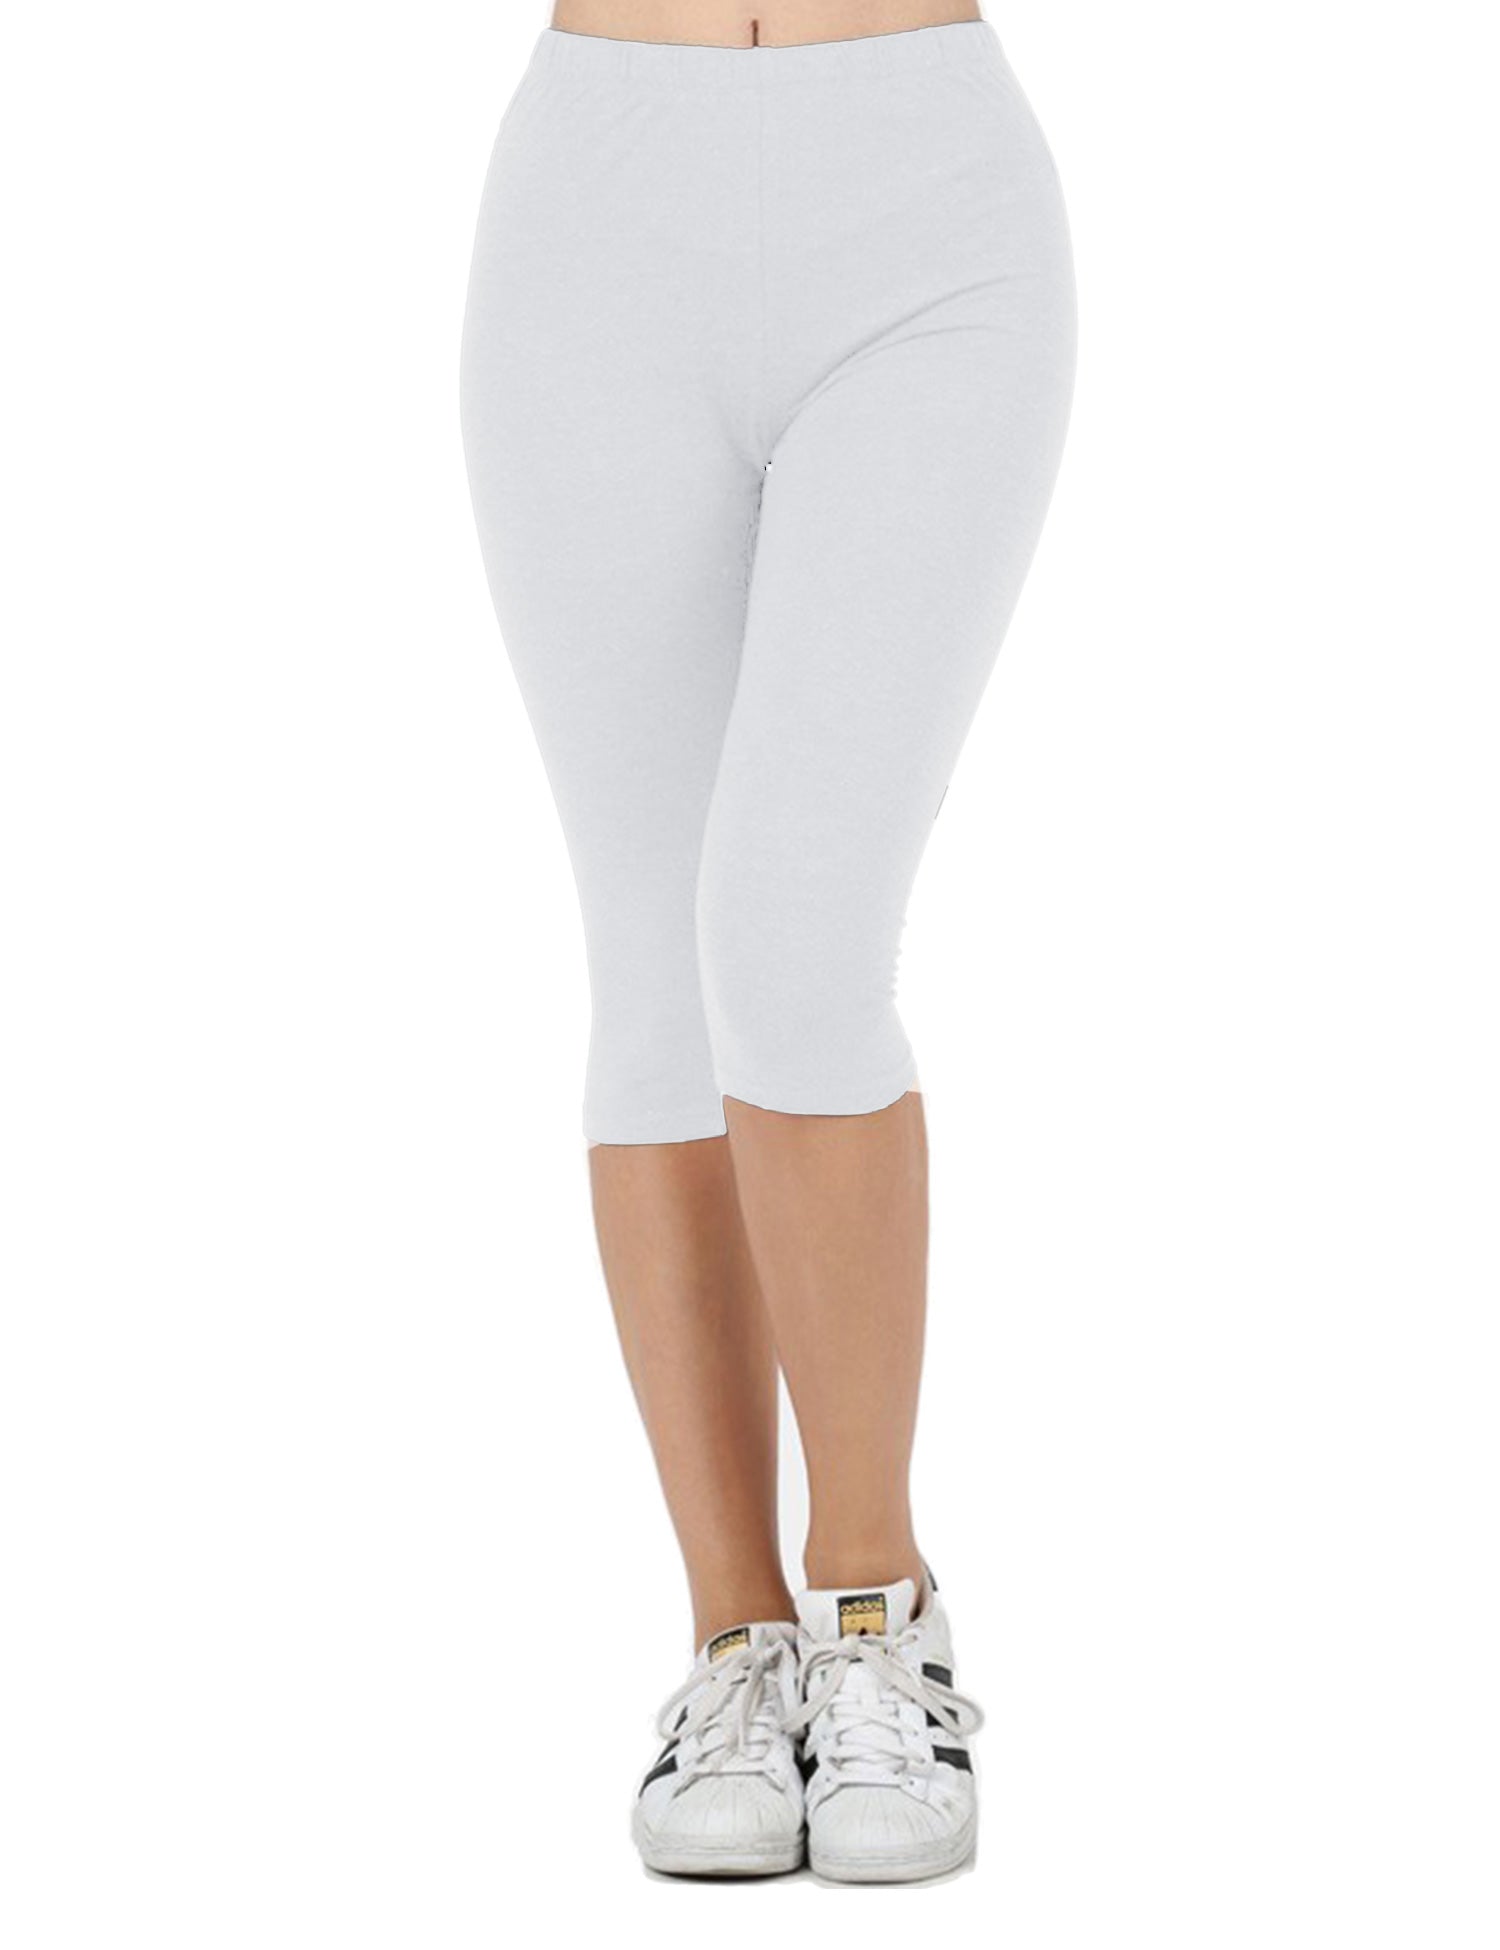 Buy online Off White Solid Full Length Leggings from Capris & Leggings for  Women by Valles365 By S.c. for ₹429 at 52% off